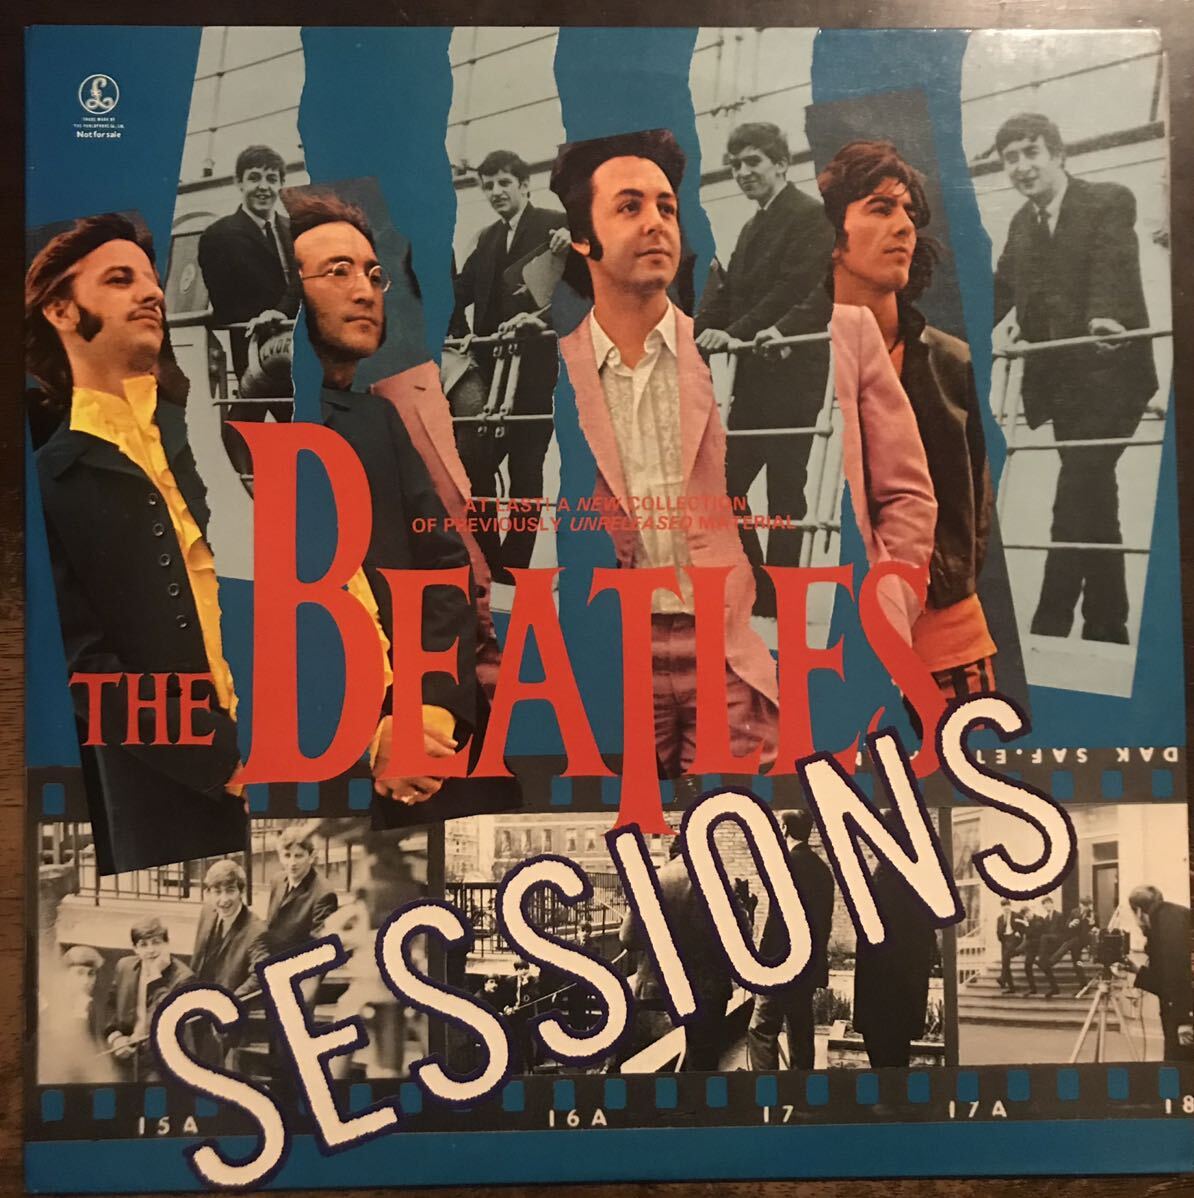 ■THE BEATLES ■ザ・ビートルズ■ Sessions / 1LP / Coating Jacket / レコード / アナログ盤 / ヴィンテージLP / 歴史的名盤 / 廃盤の画像1